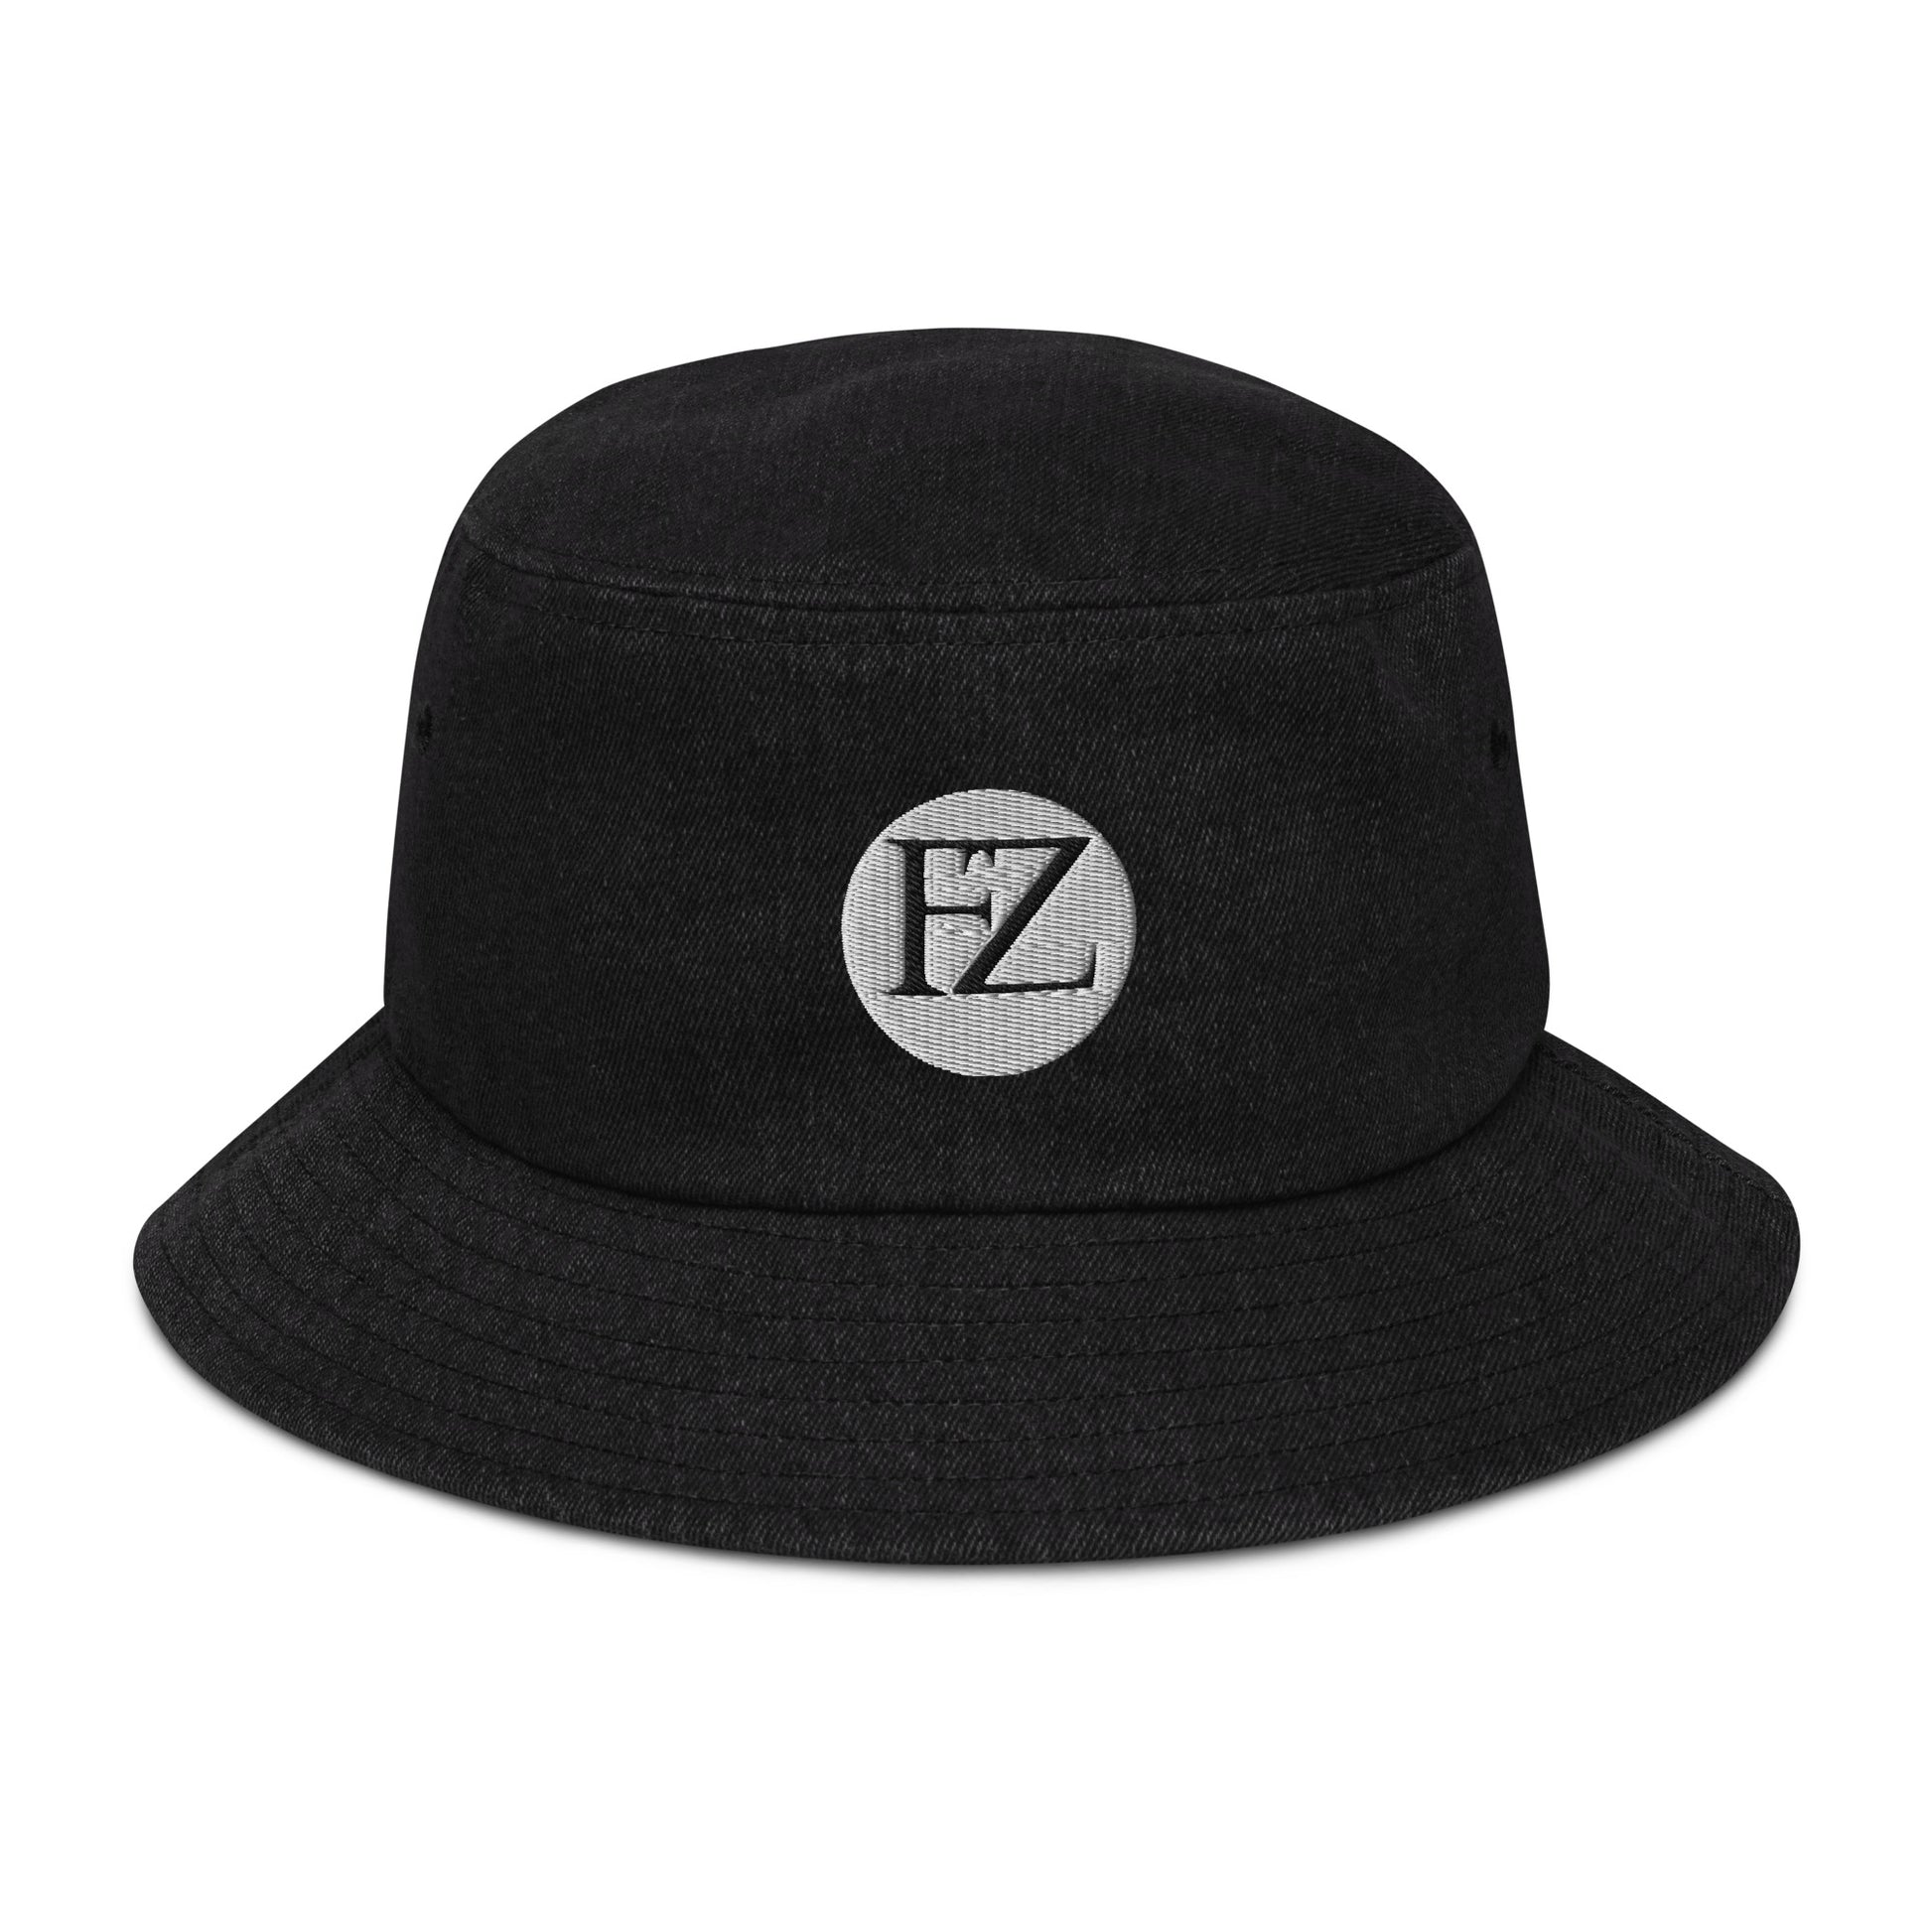 FZ Denim bucket hat - FZwear